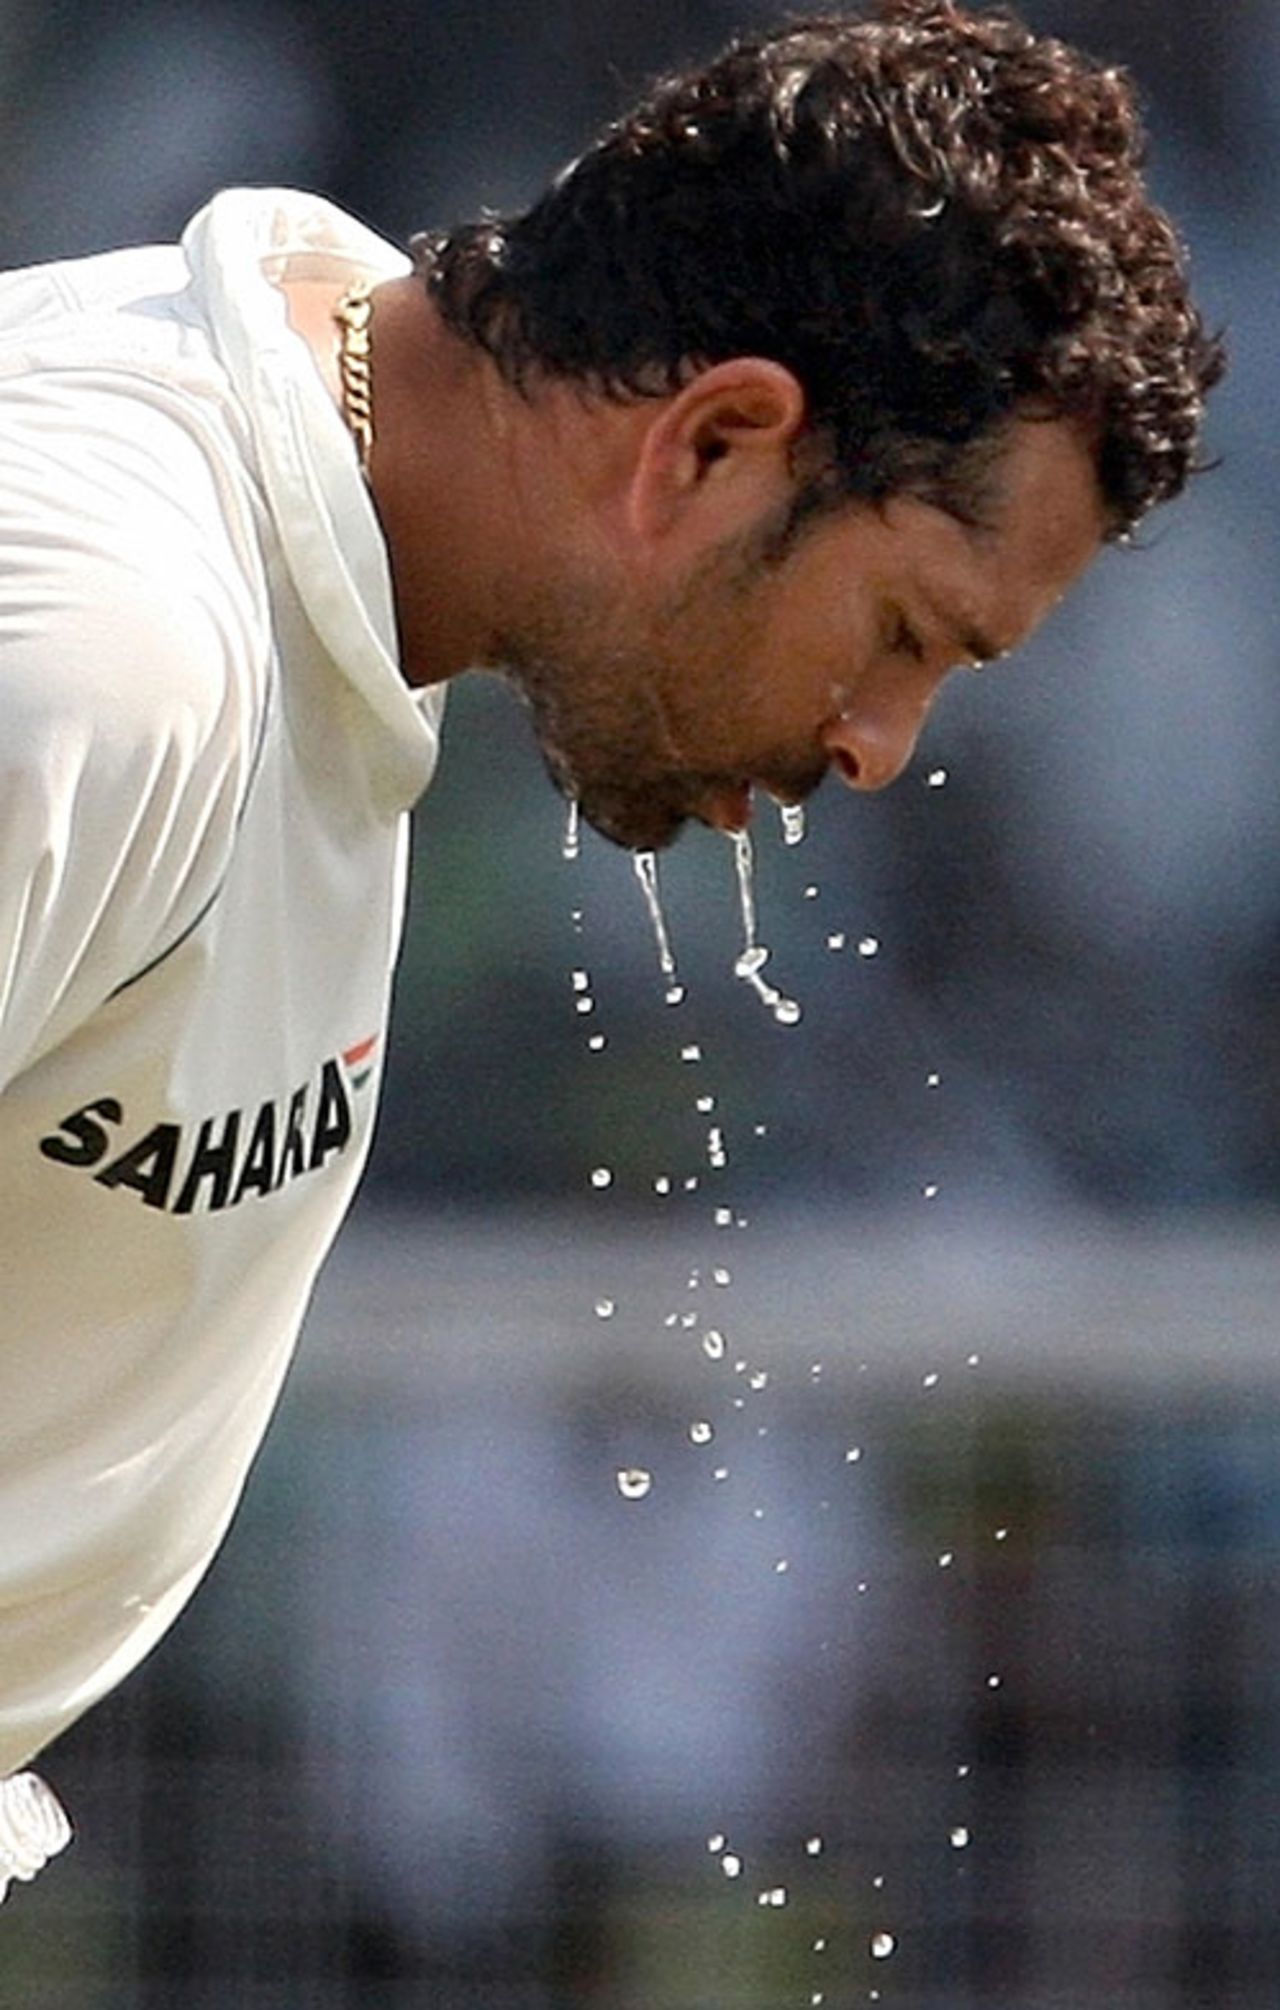 Sachin Tendulkar cools off, India v England, 1st Test, Chennai, 5th day, December 15, 2008